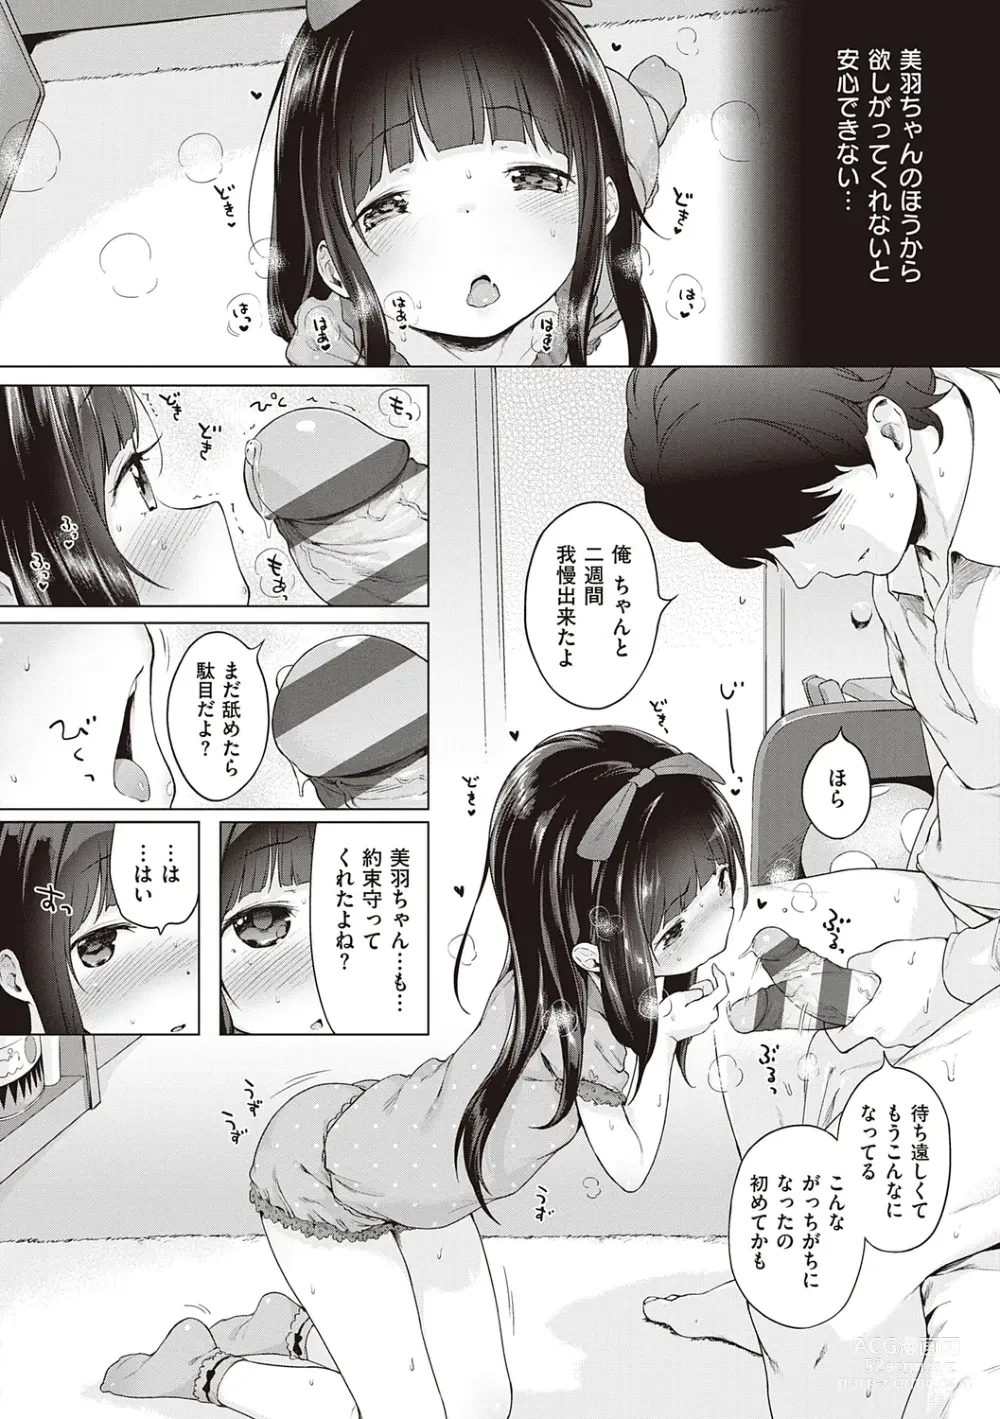 Page 36 of manga Motto! Hatsukoi Ribbon.